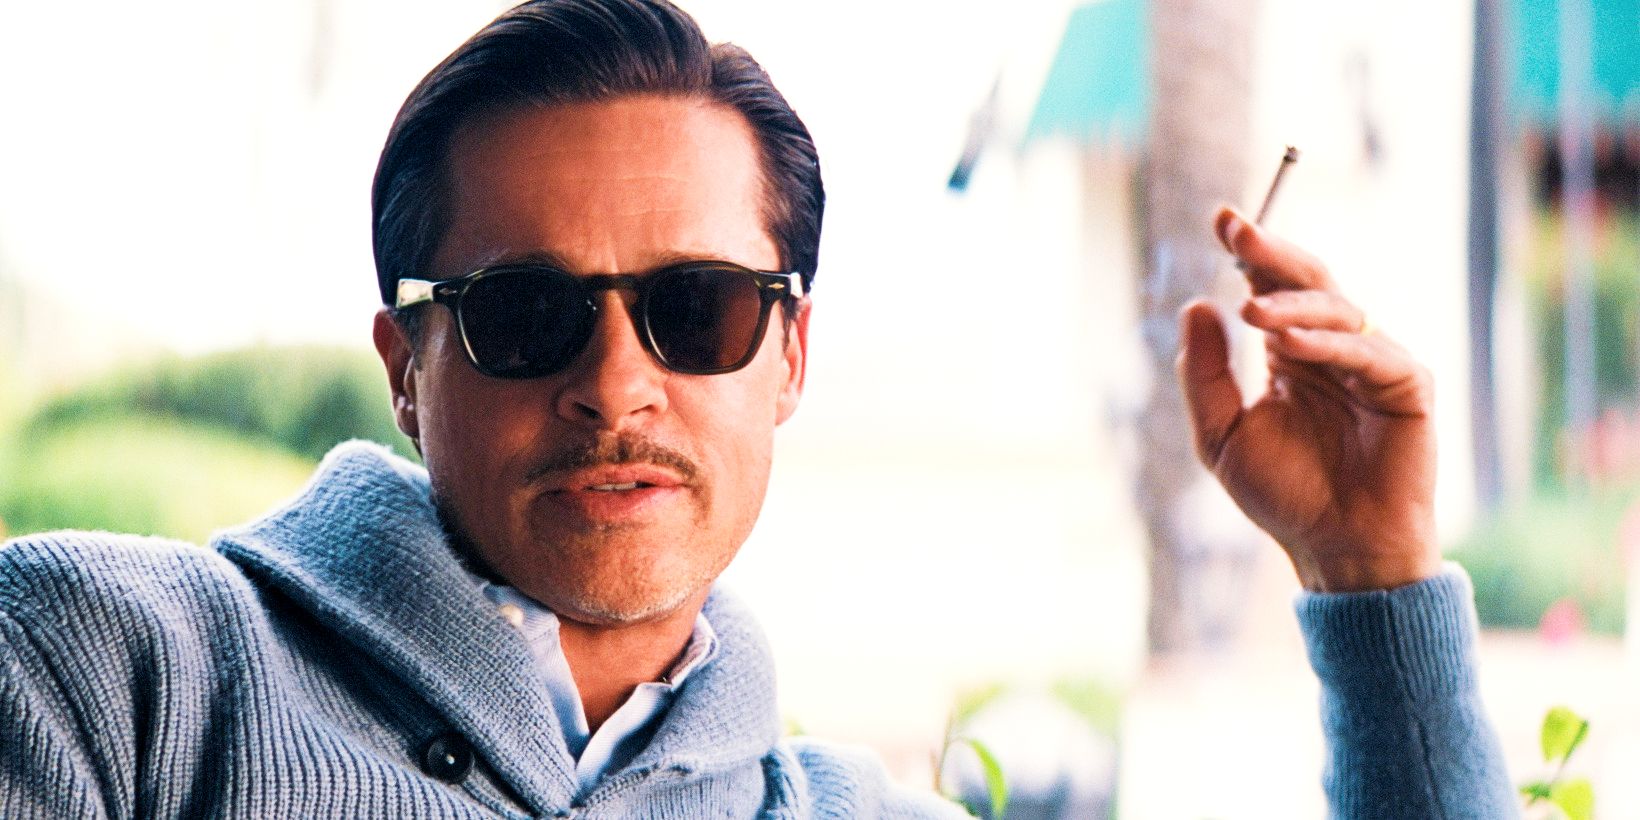 Brad Pitt as Jack Conrad smoking cigarette and wearing sunglasses in Babylon